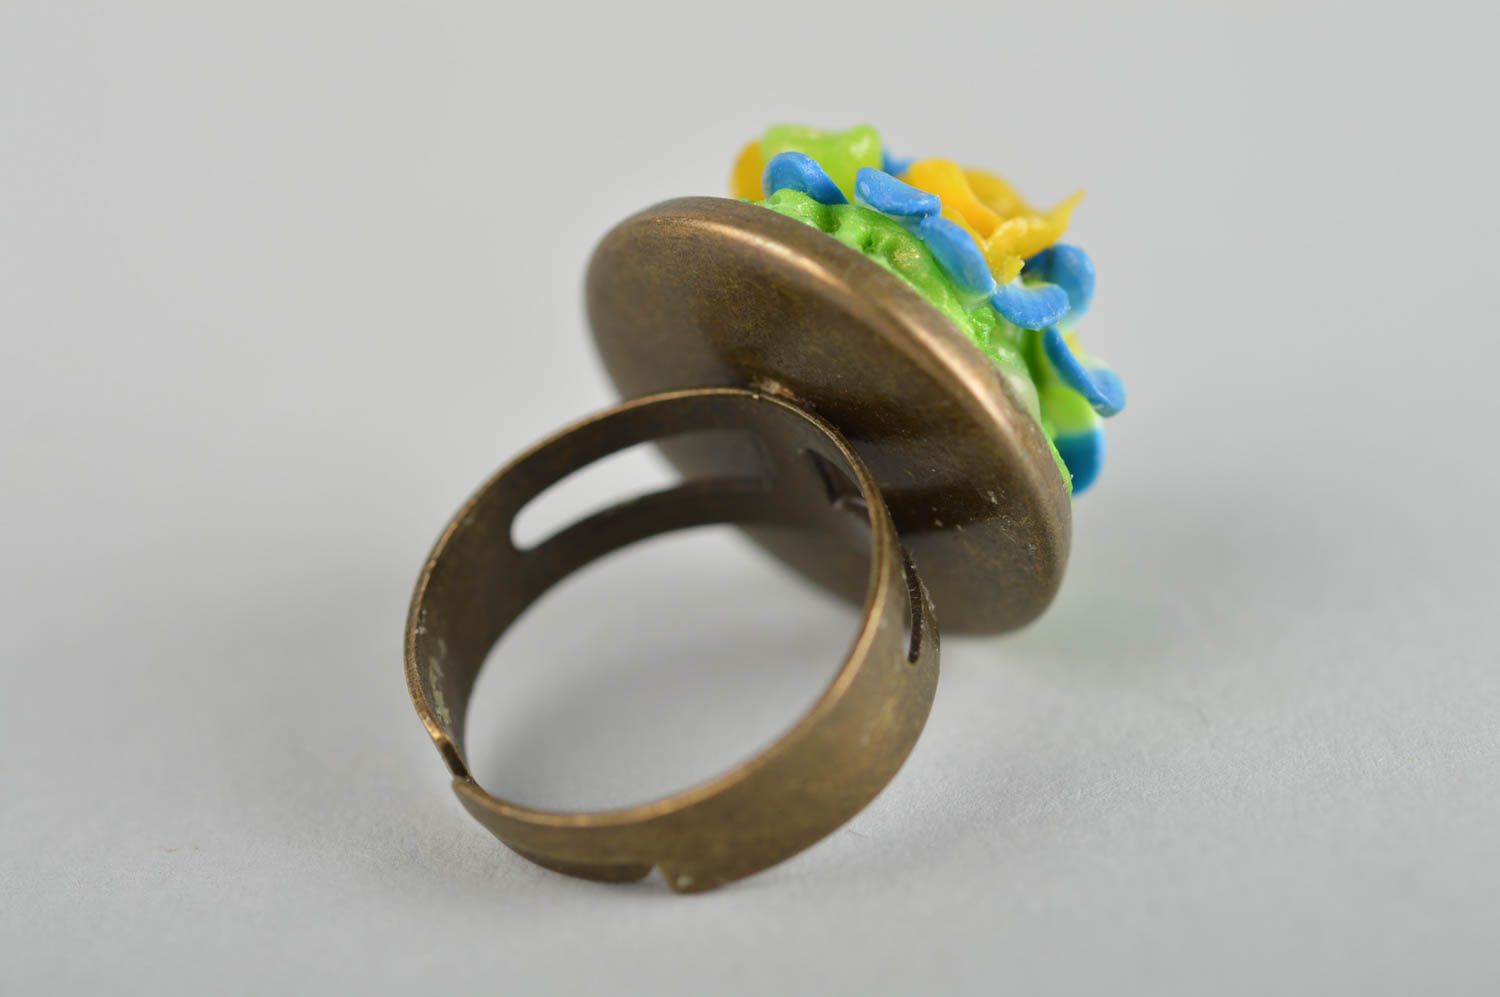 Unusual handmade ring plastic flower ring costume jewelry designs gift ideas photo 4